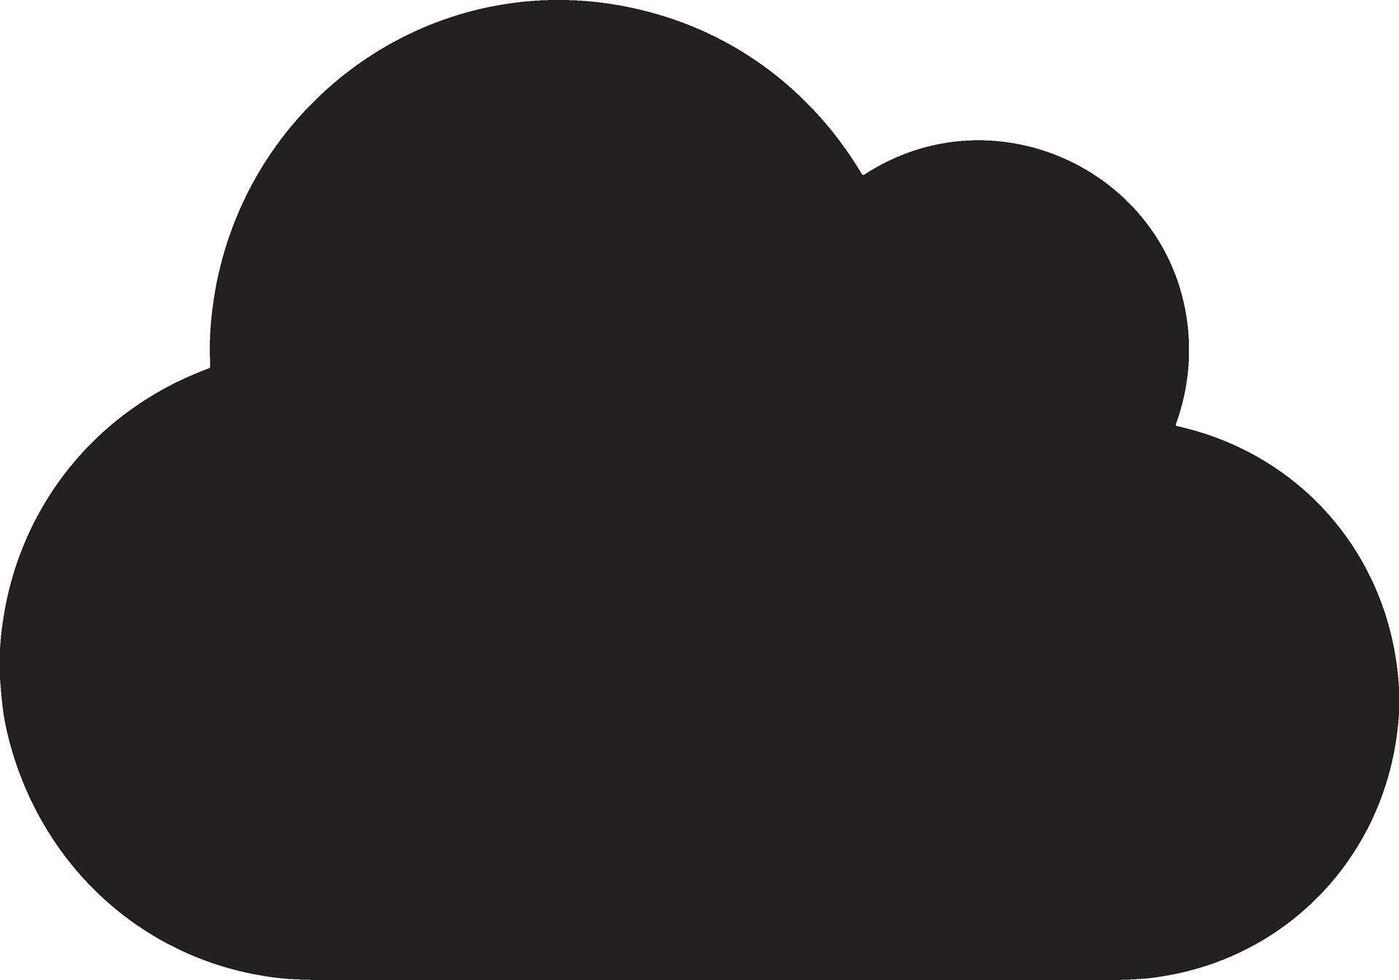 Cloud icon symbol image. Illustration of the hosting storage design vector